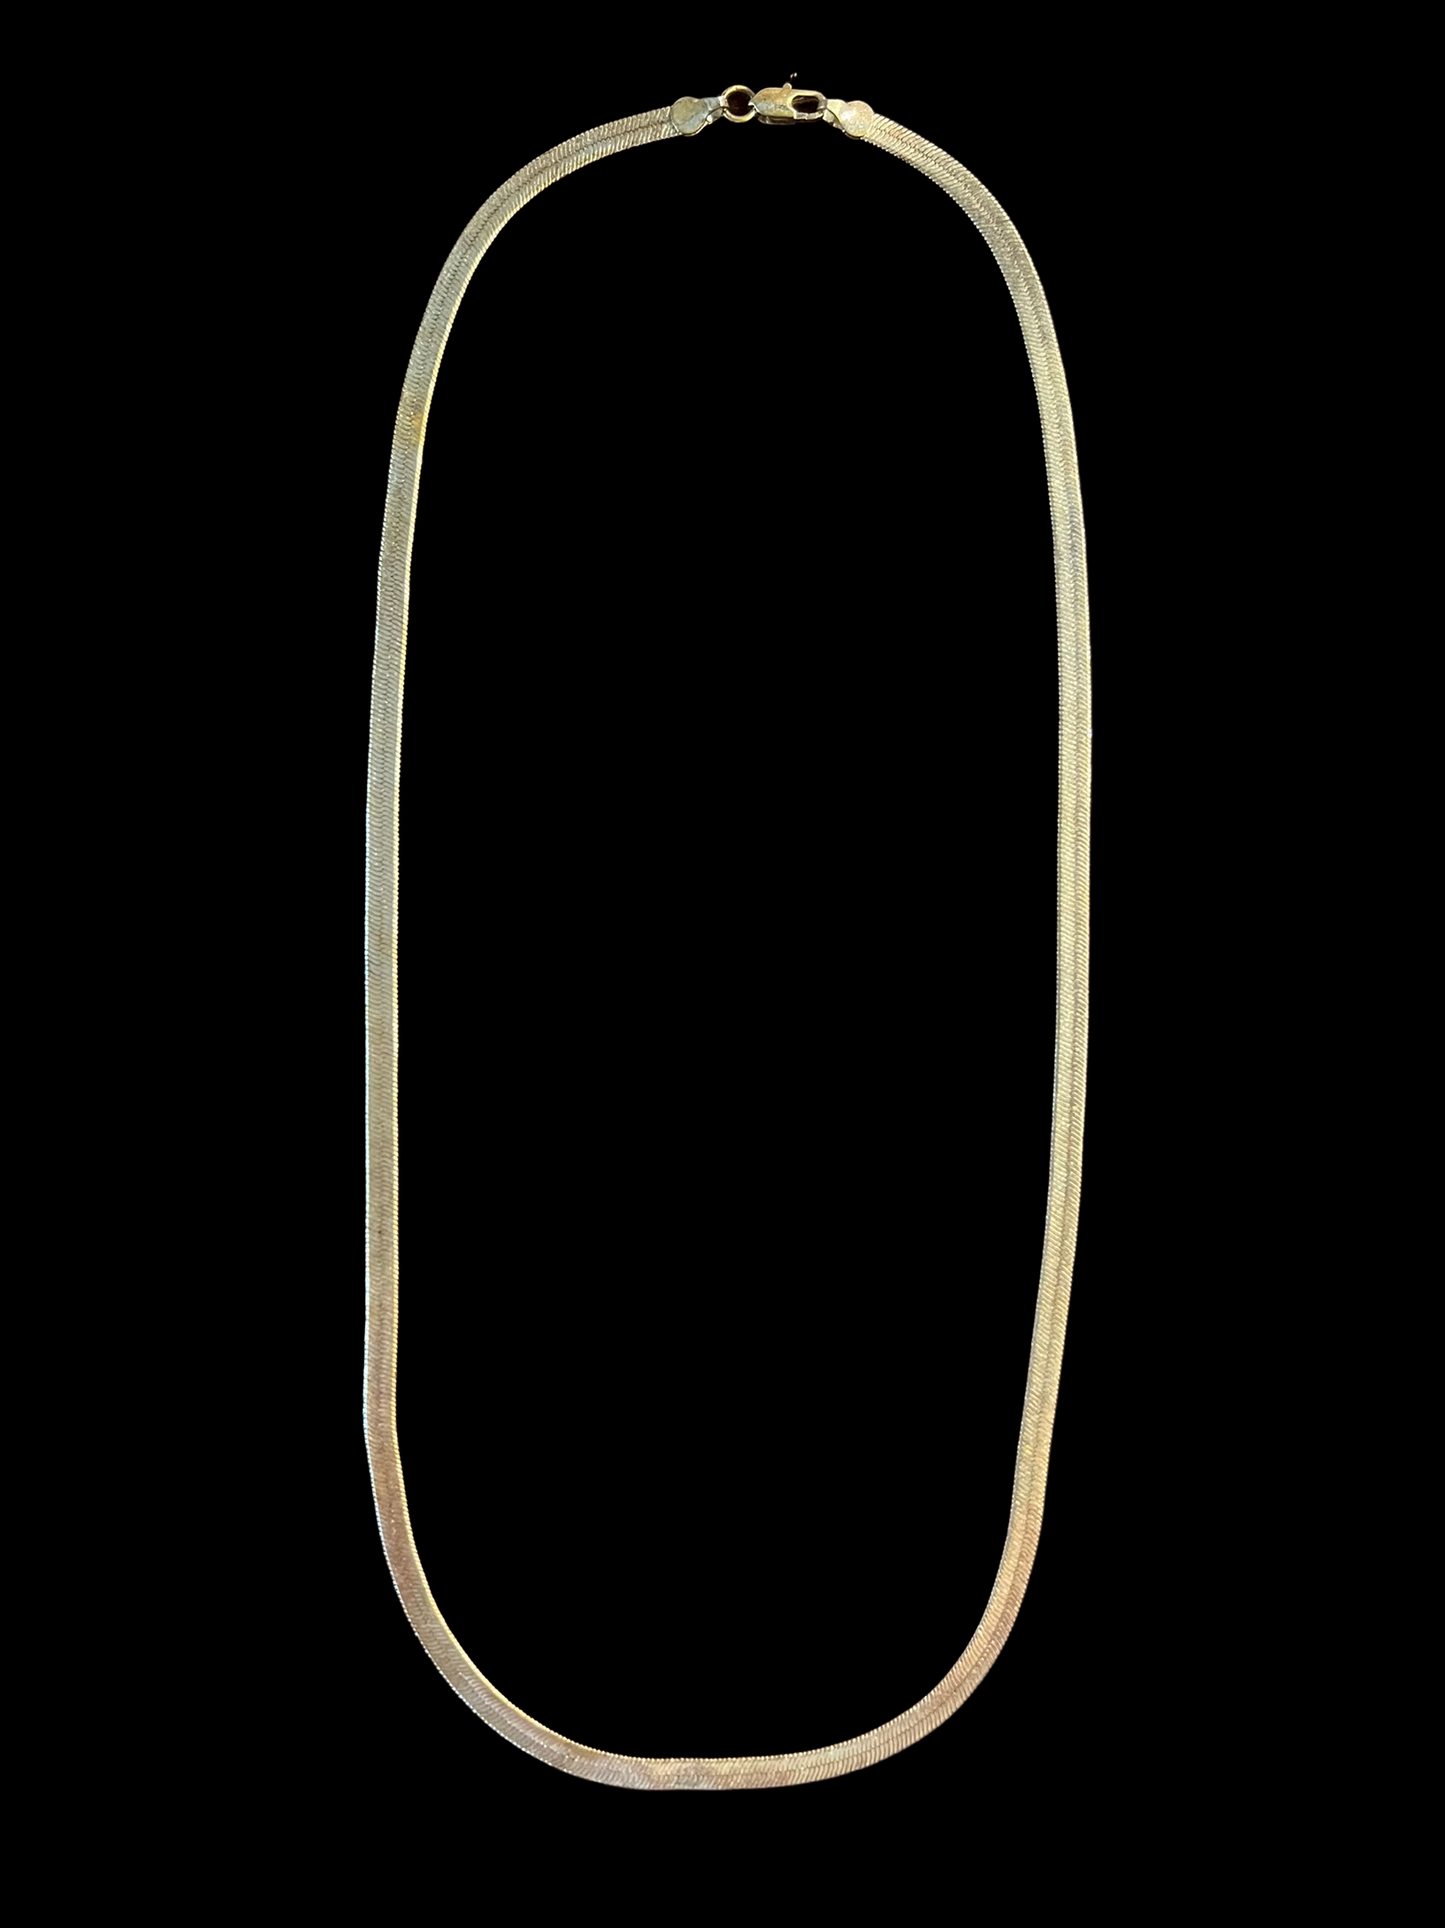 Silver Herringbone Necklace